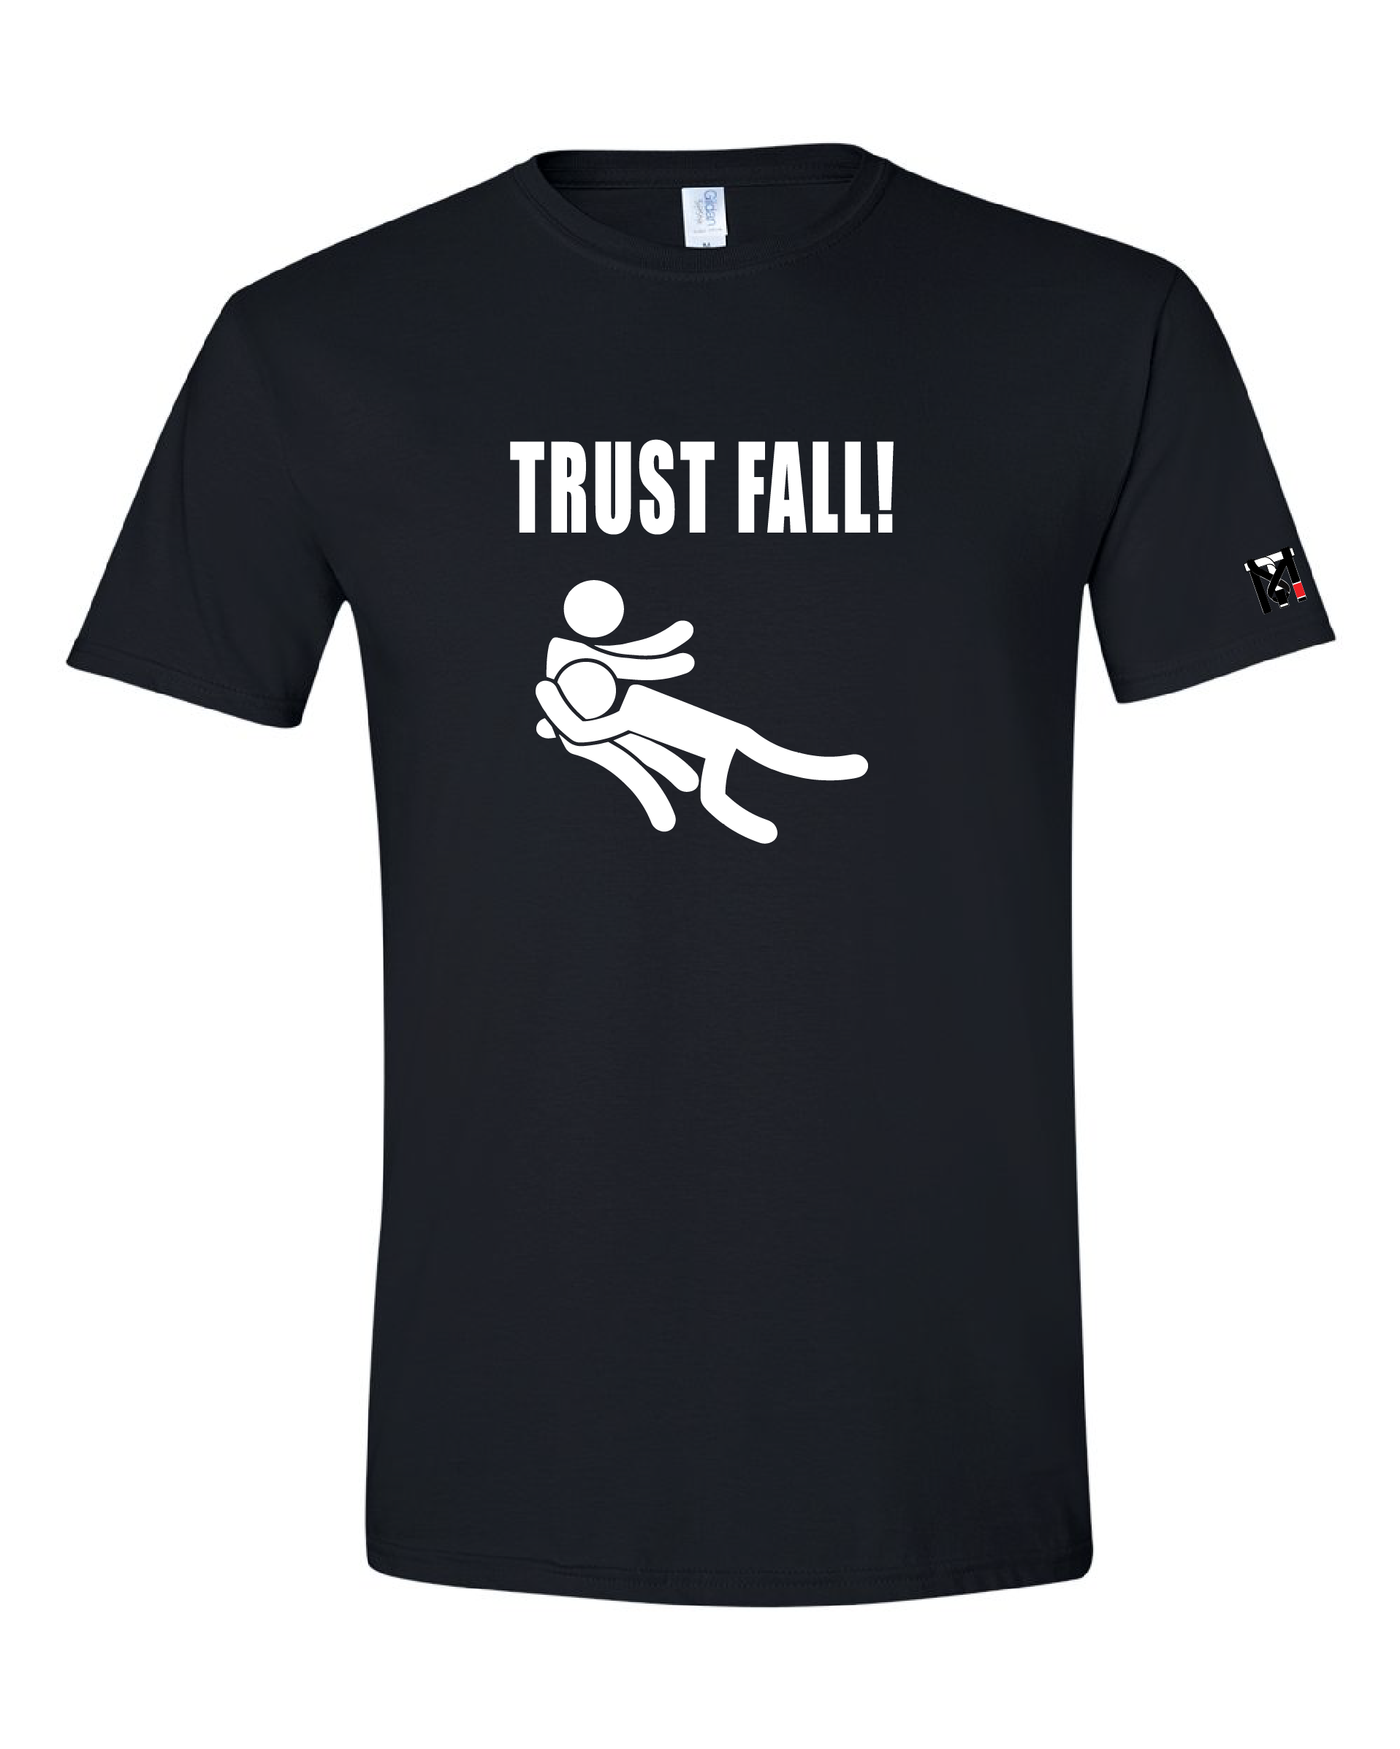 Trust Fall Tee